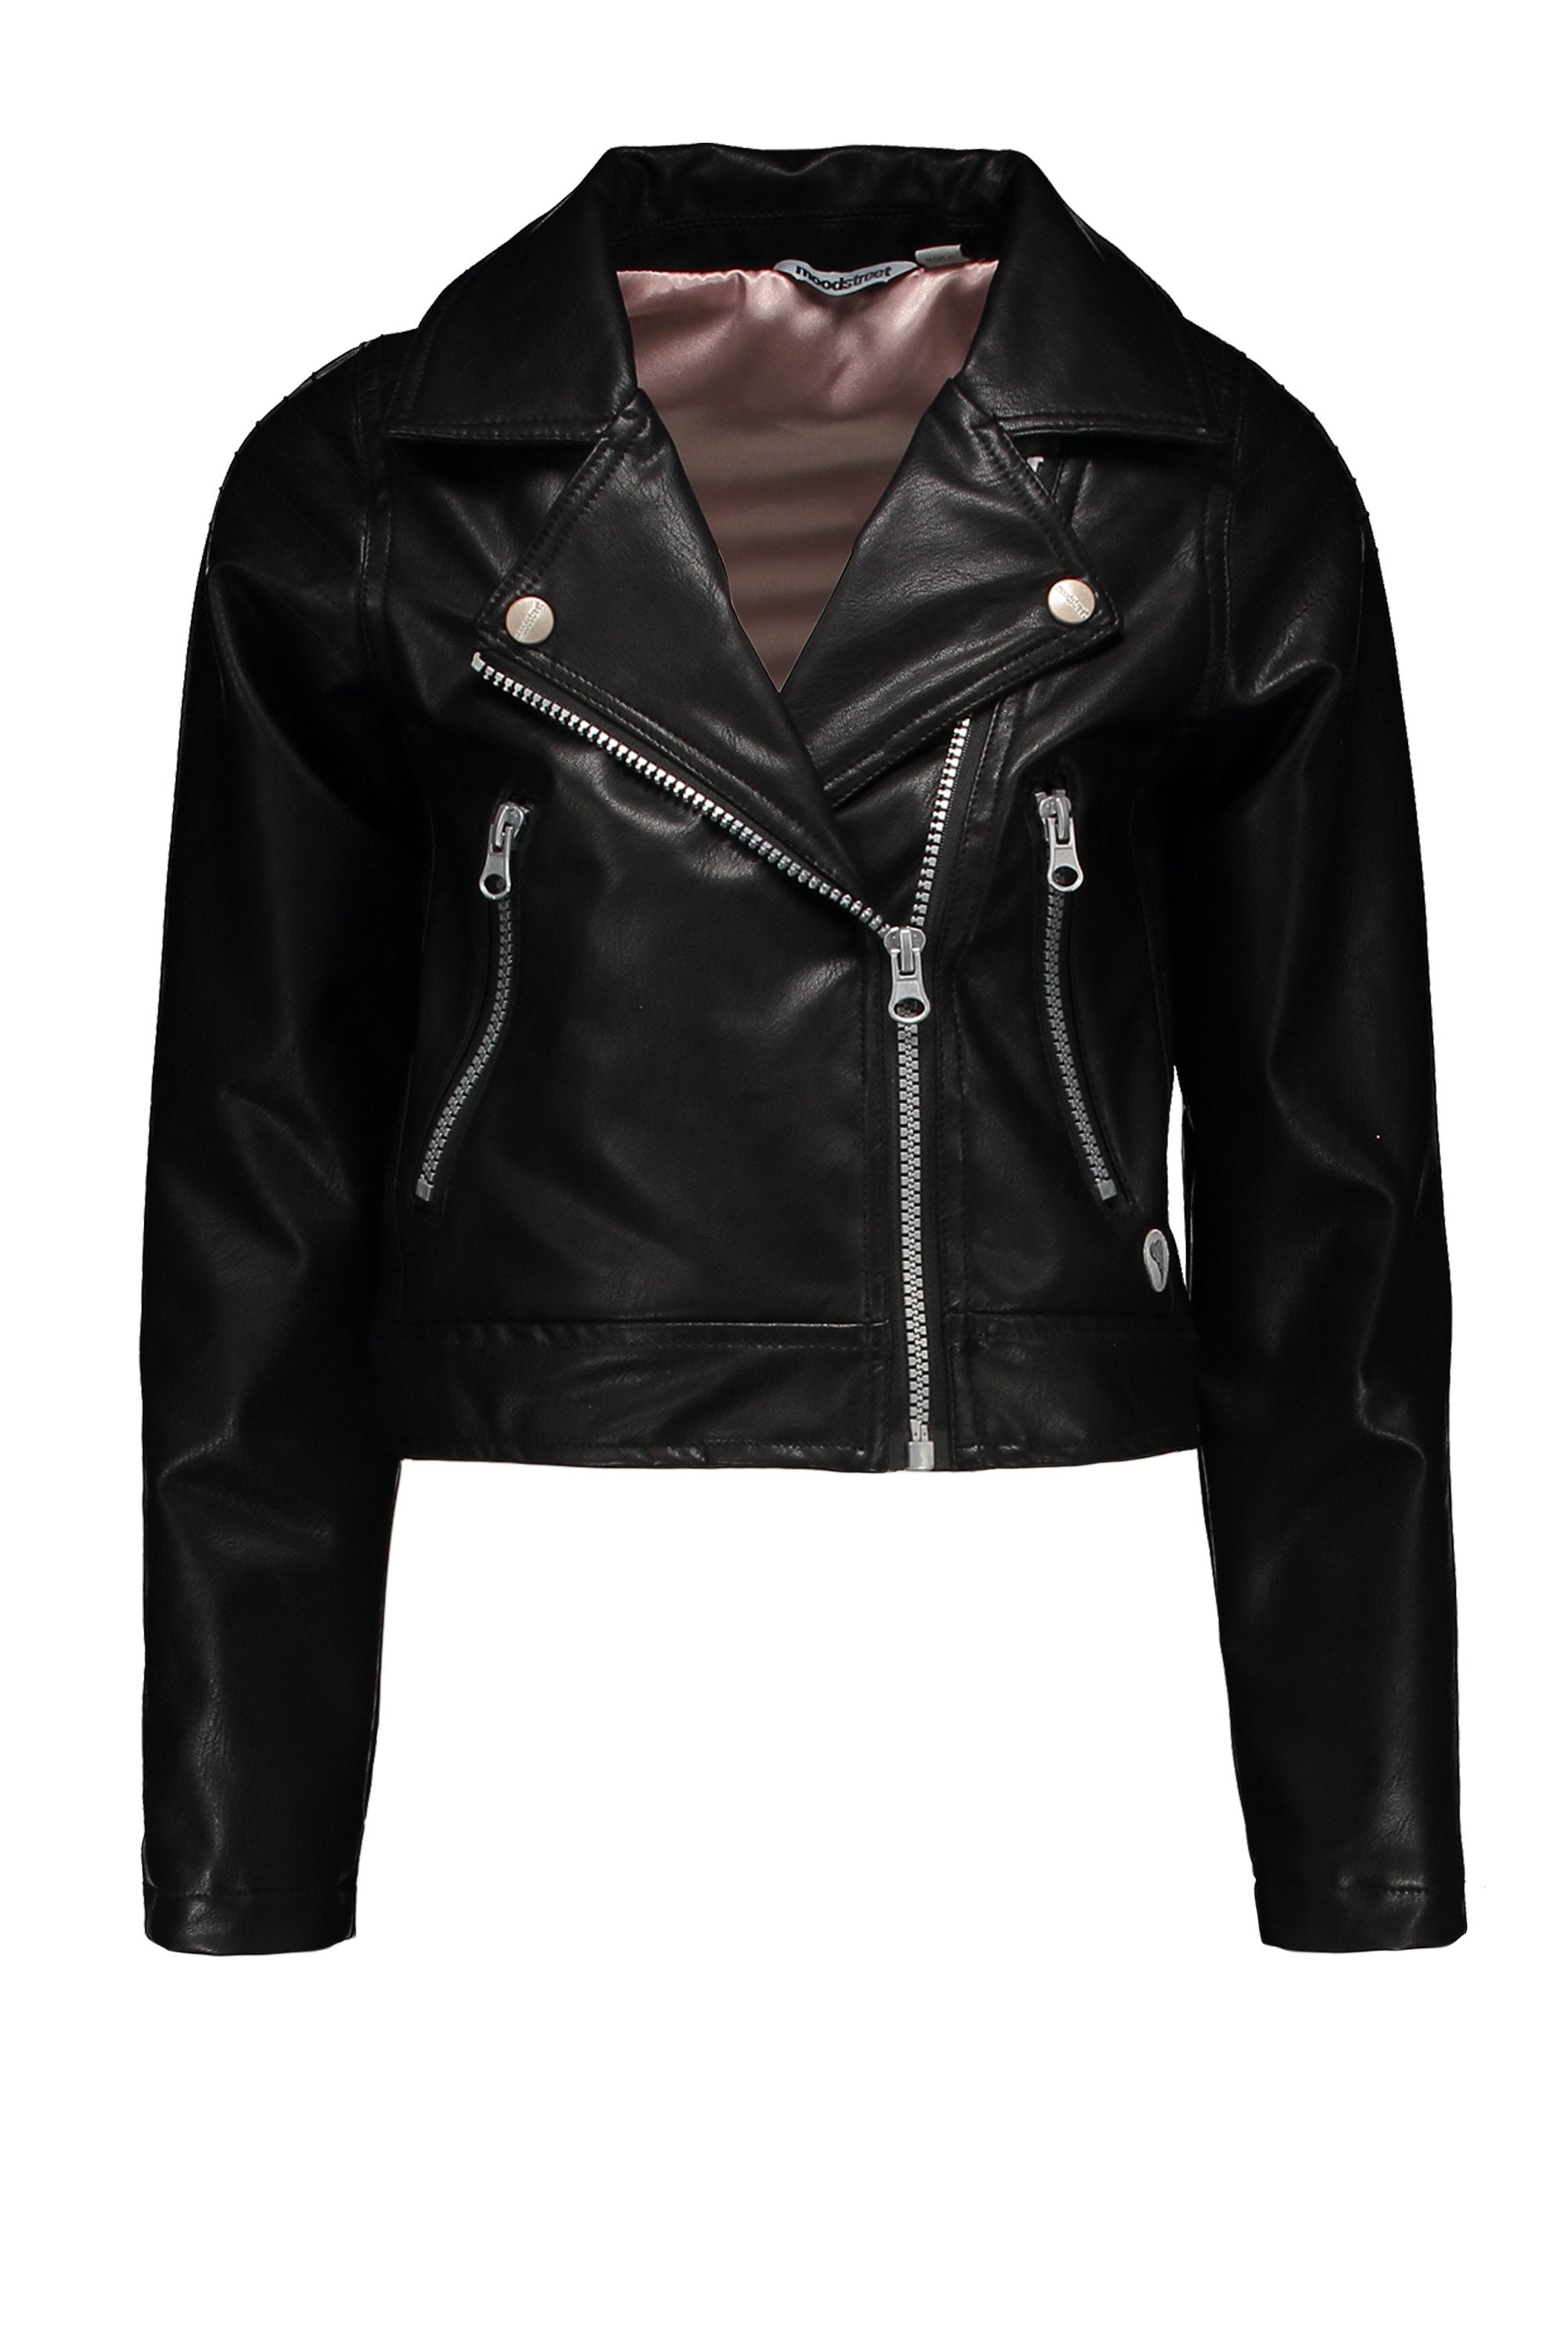 Meisjes Fake Leather Jacket van Moodstreet in de kleur Black in maat 110/116.